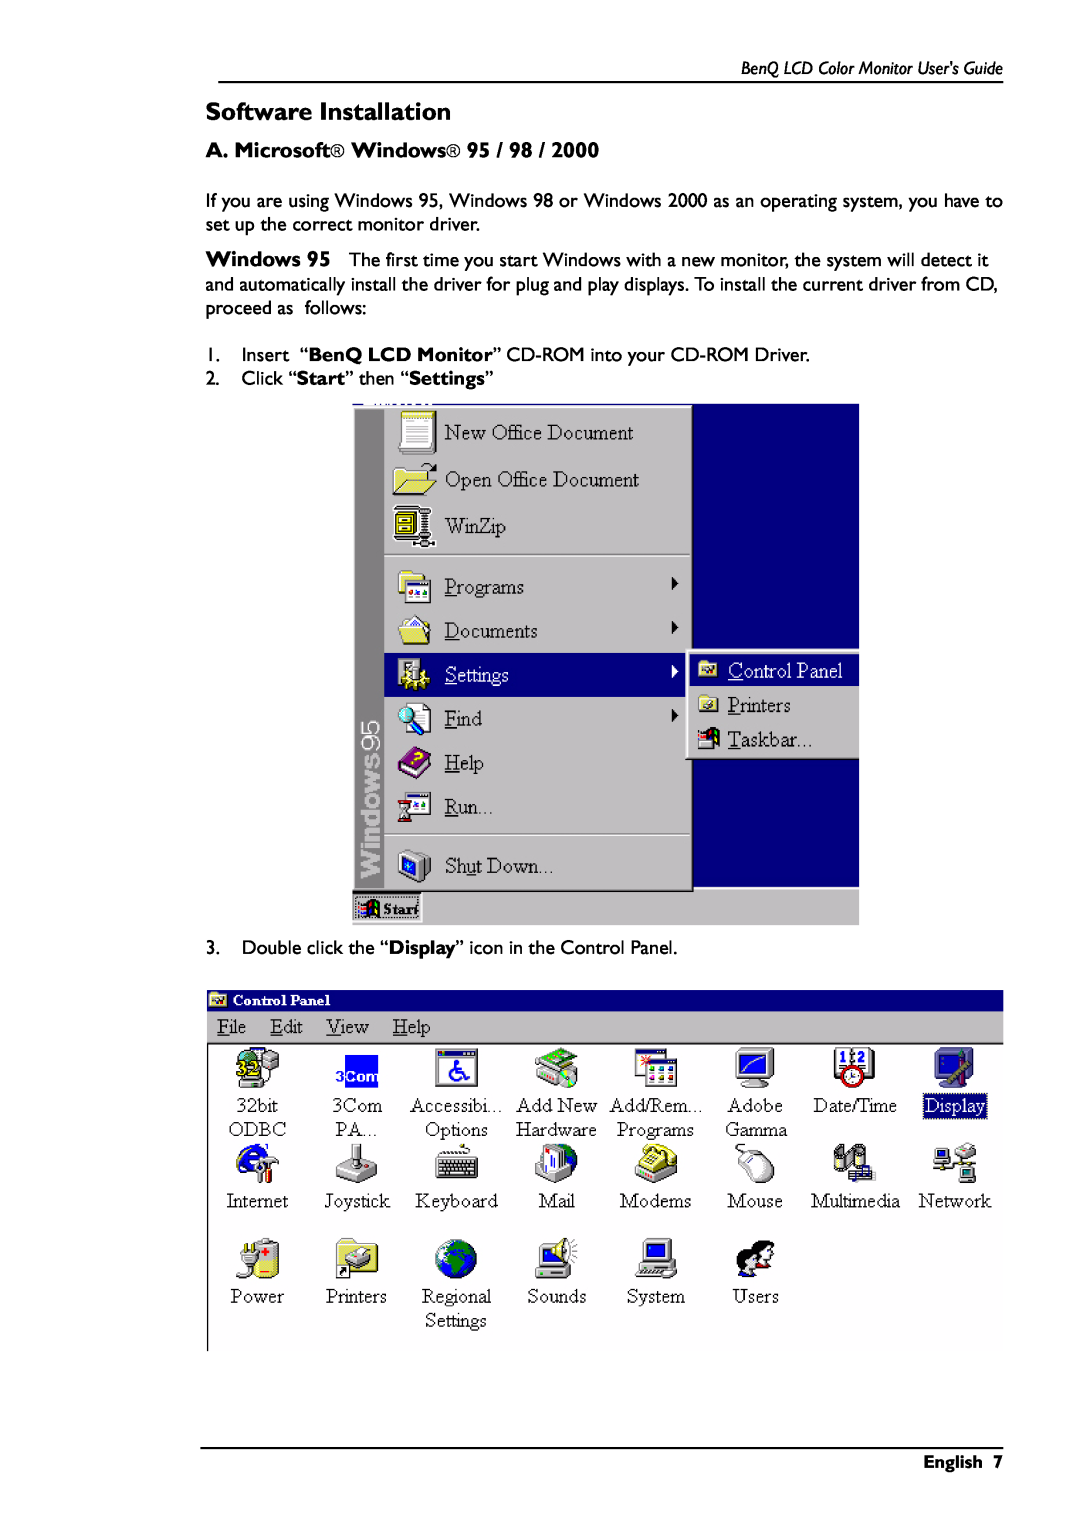 BenQ FP567 user manual Software Installation, A. Microsoft Windows 95 / 98 